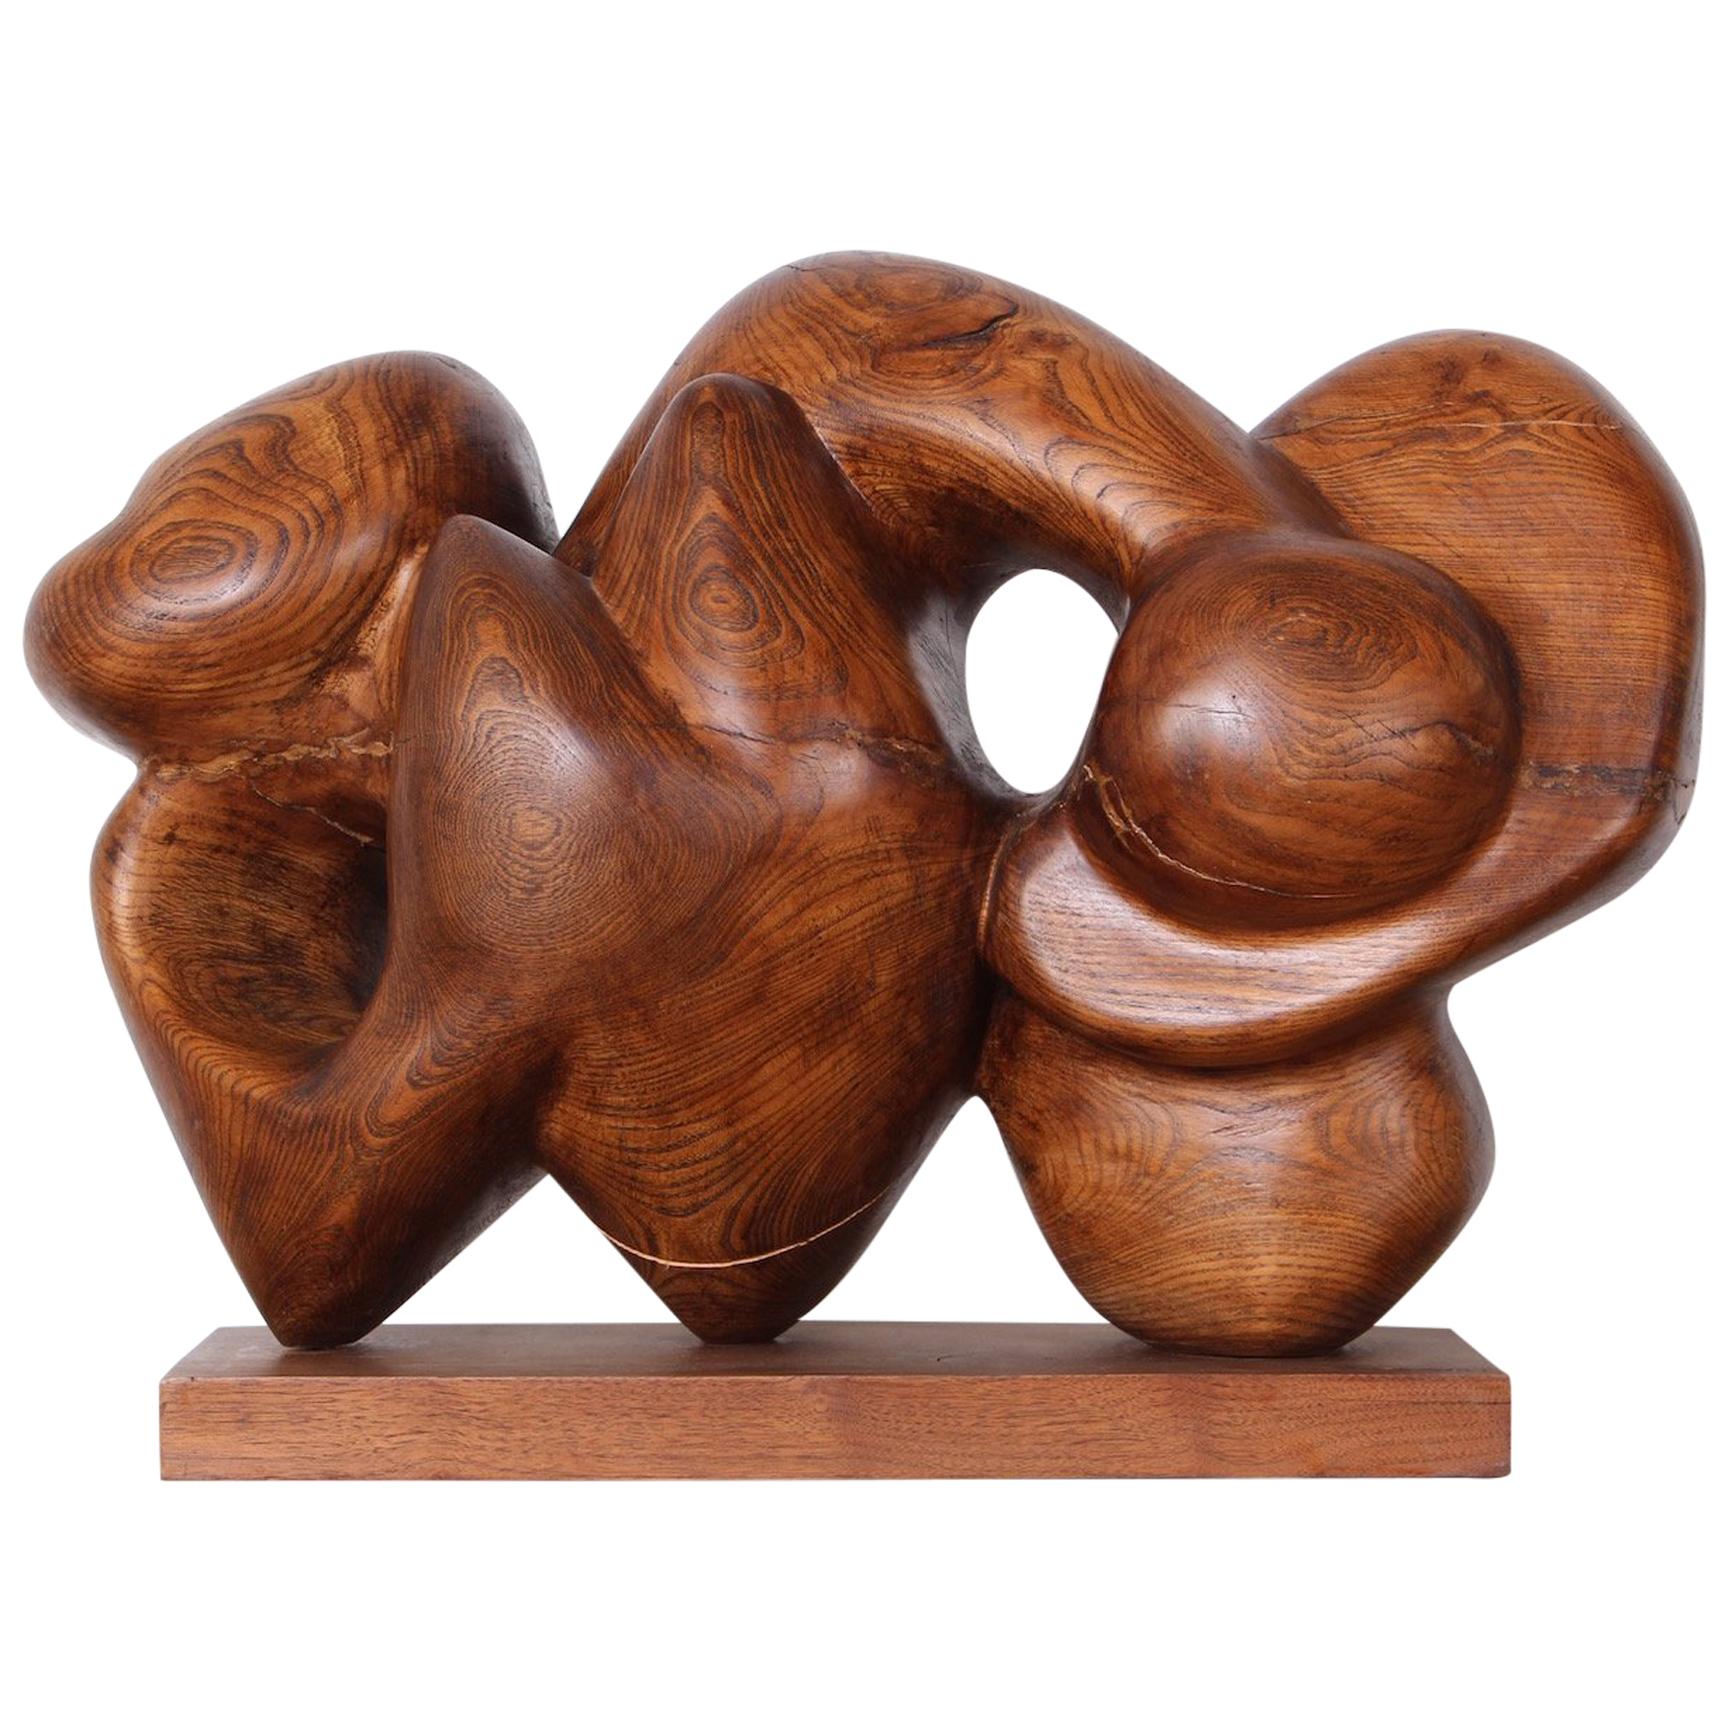 Wooden Abstract Sculpture by Robert Winslow